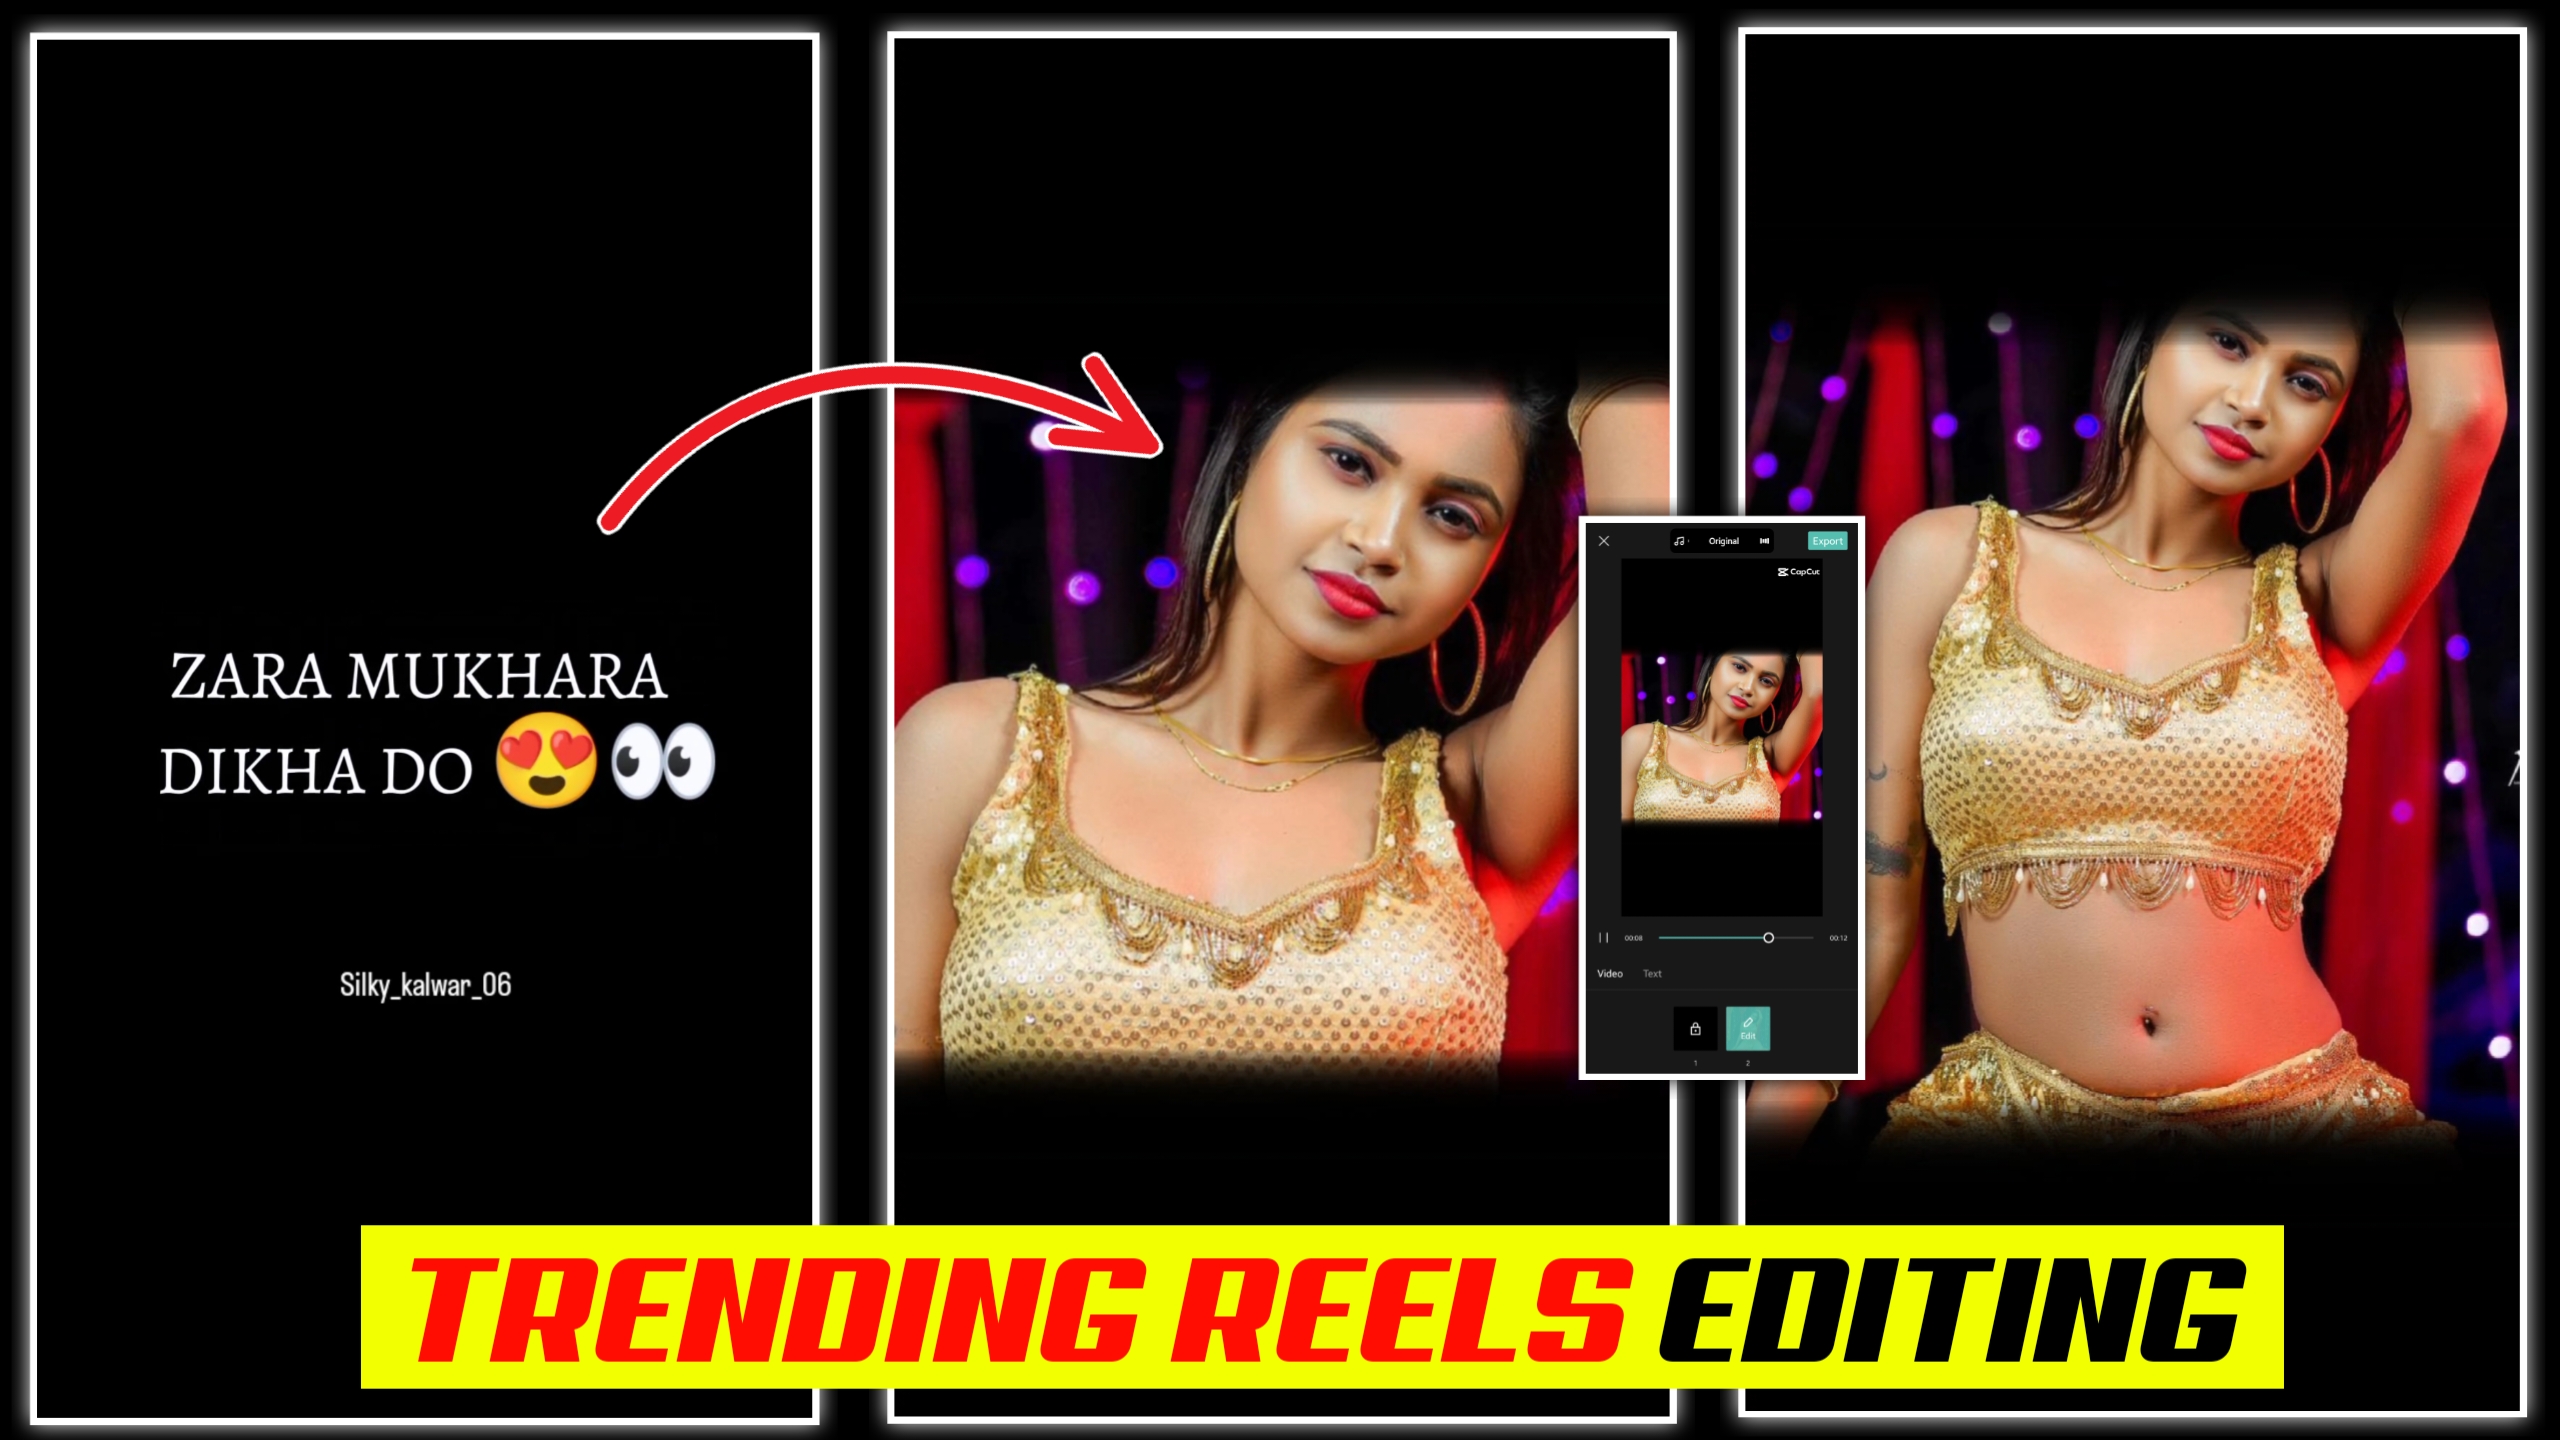 Jara mukhda dikha do reels editing || Instagram trending reels editing || Capcut video editing